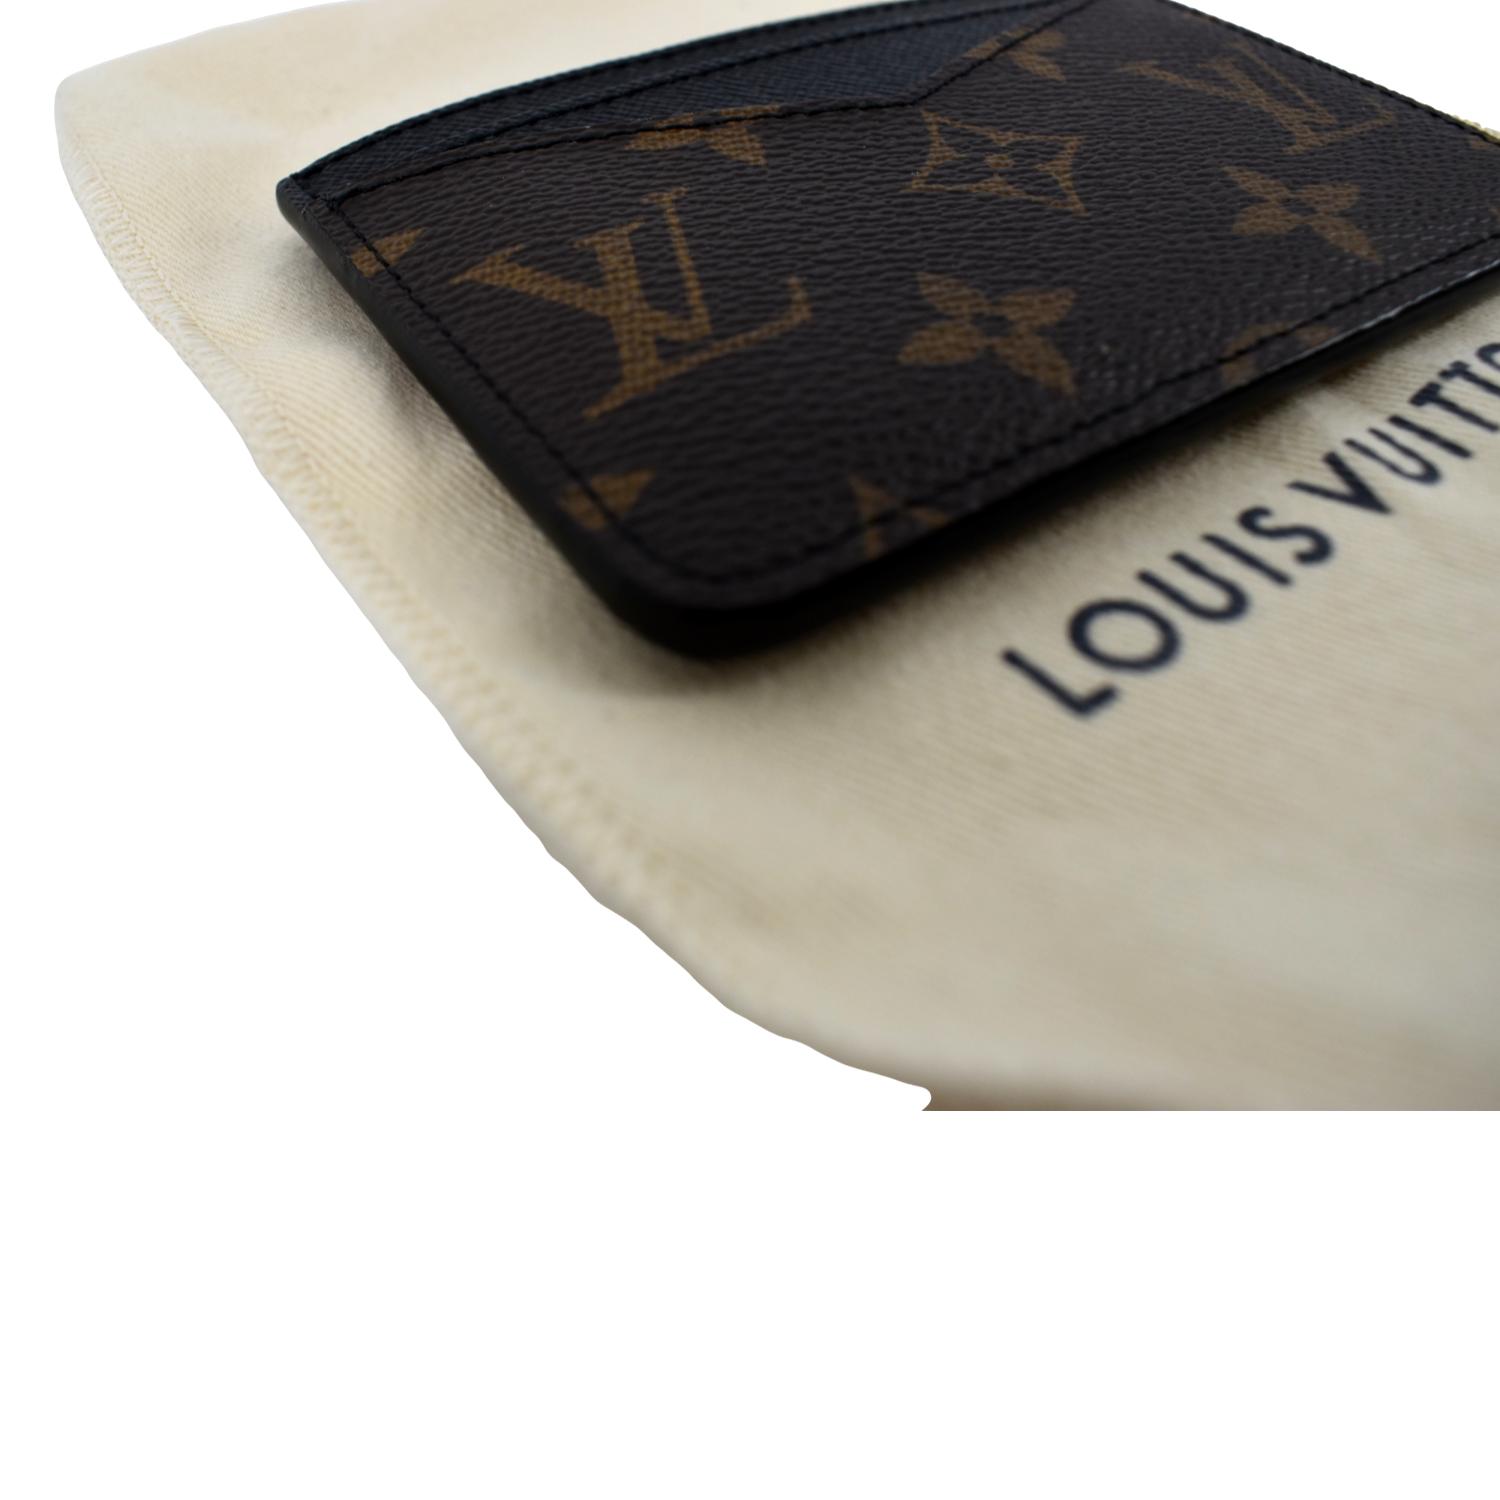 Louis Vuitton Card Holder in Monogram Reverse VS Neo Card Holder